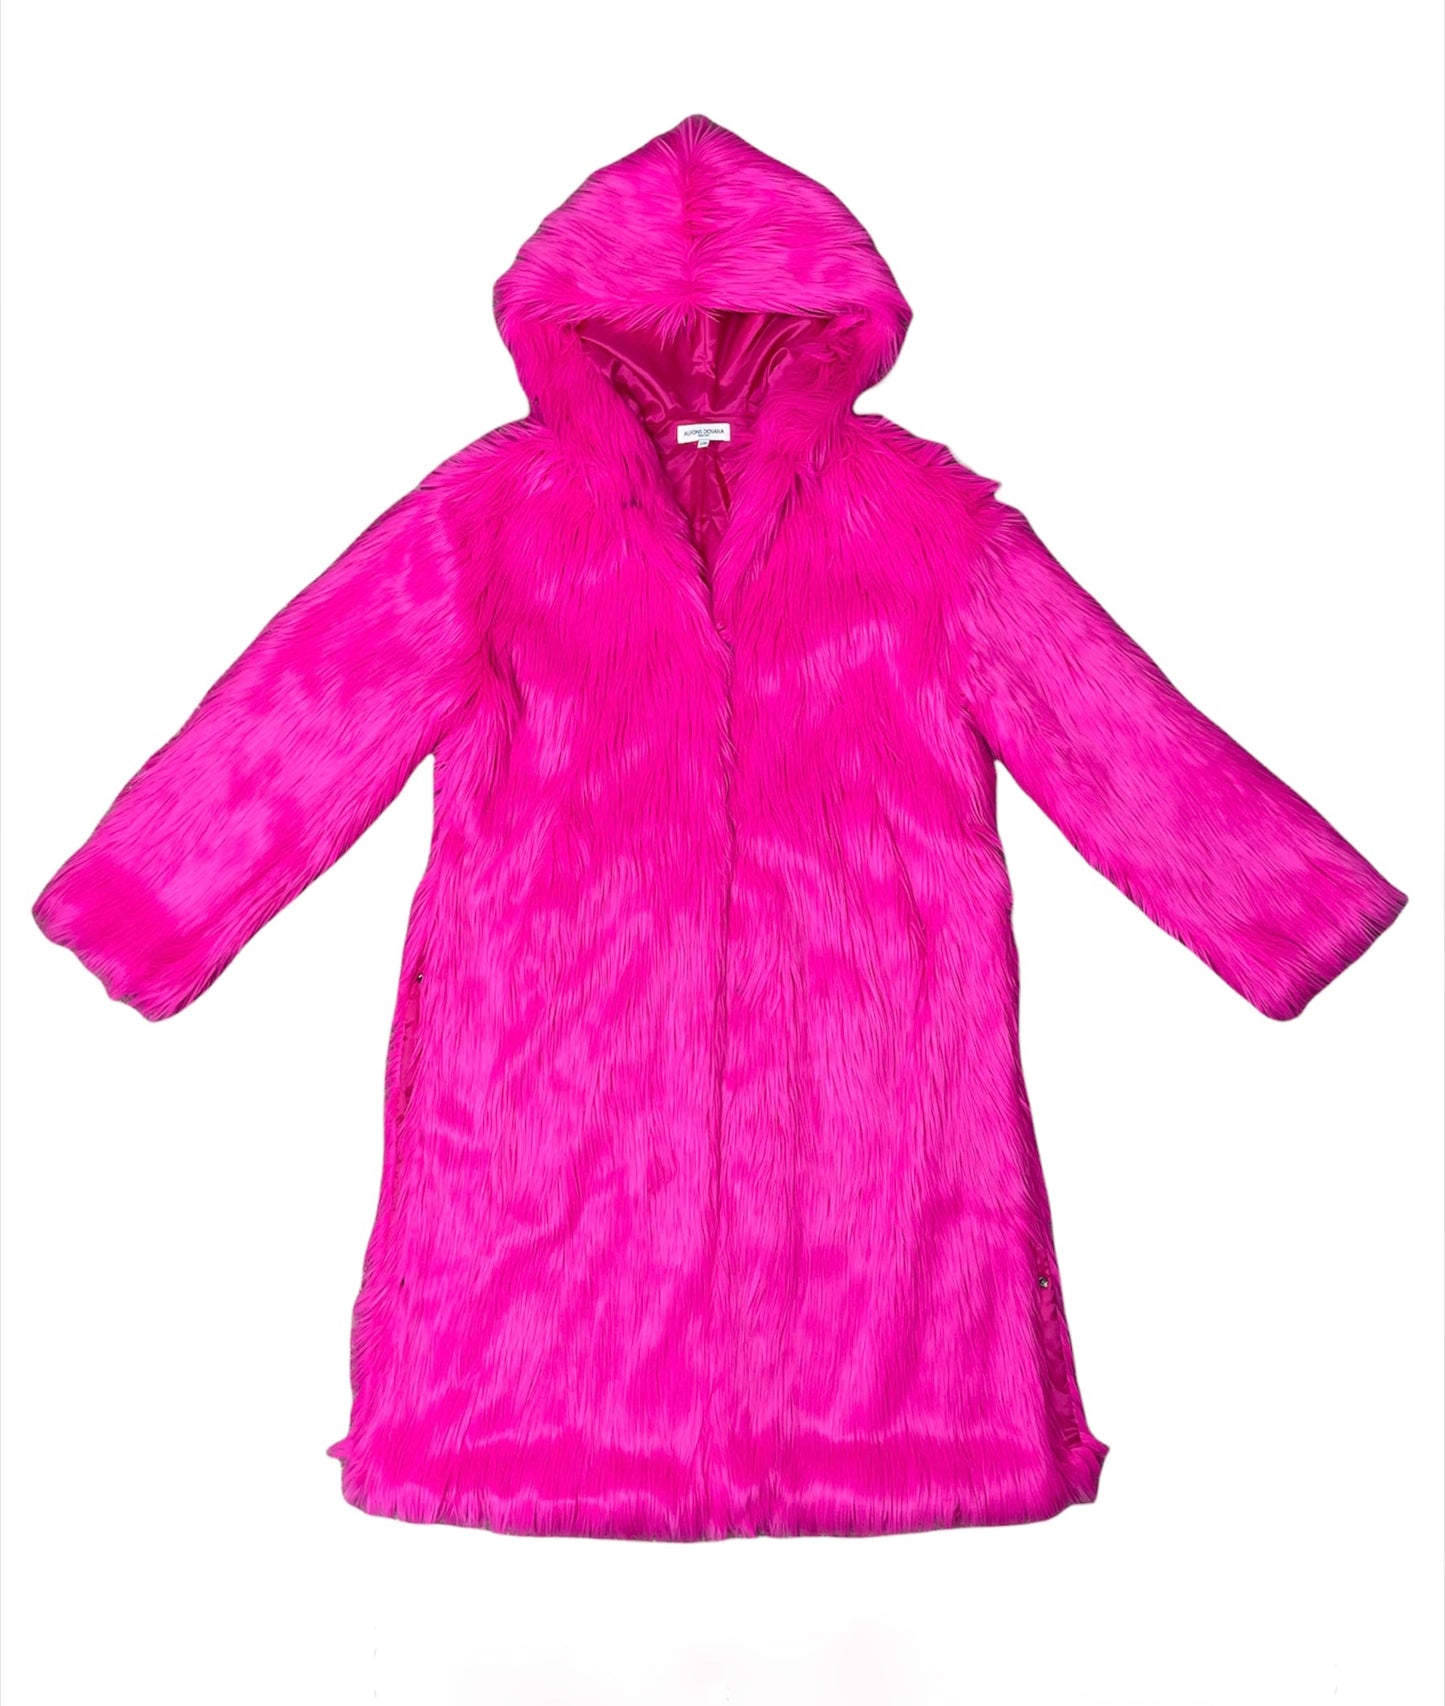 Bearbie Fur Coat